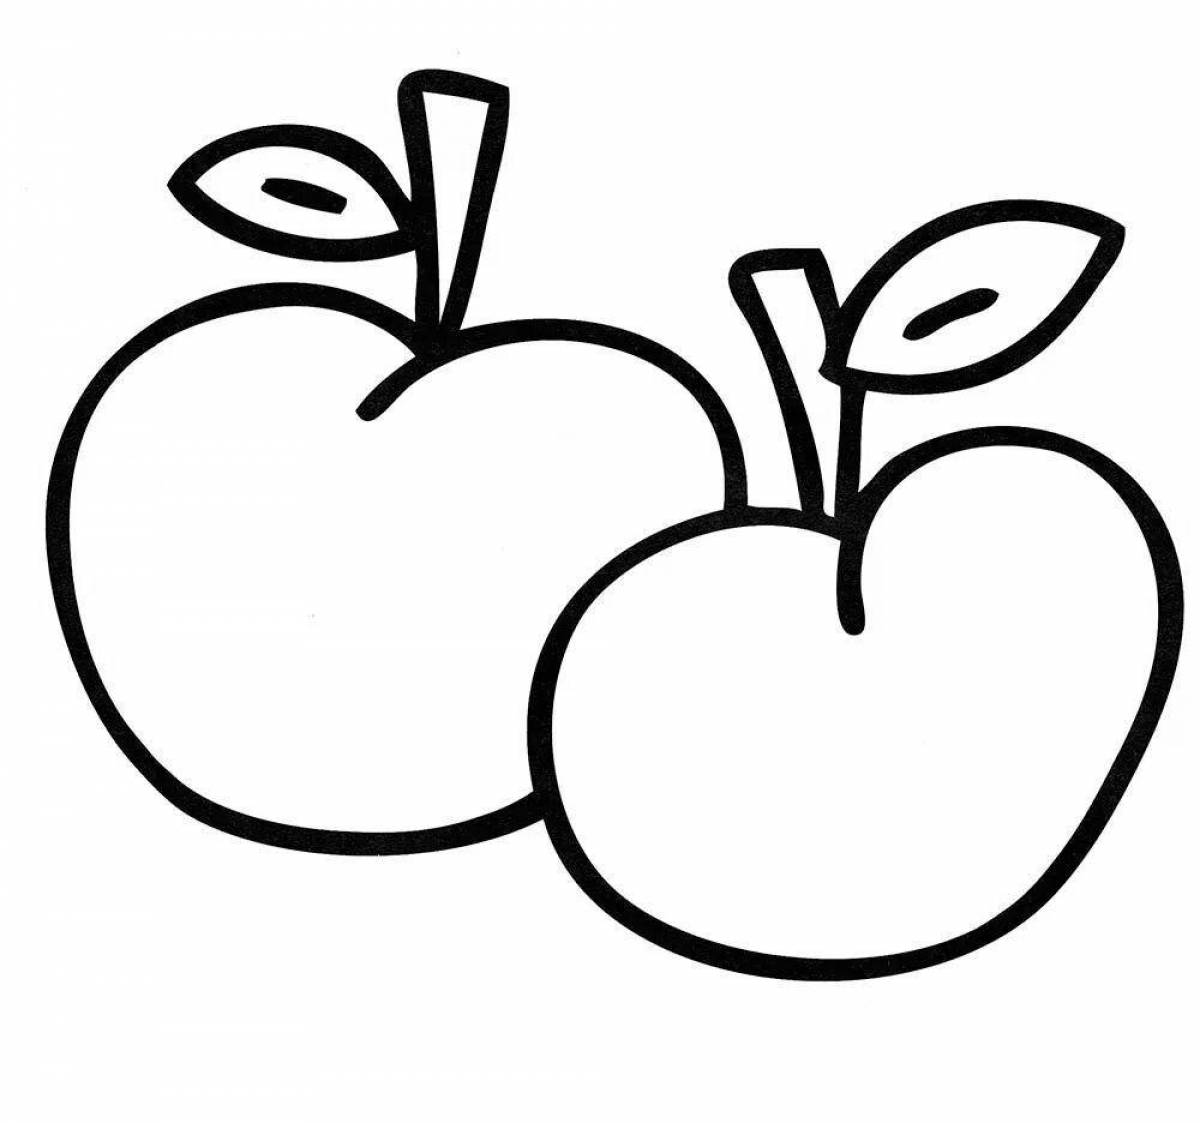 Яркая яблочная раскраска для детей 4-5 лет